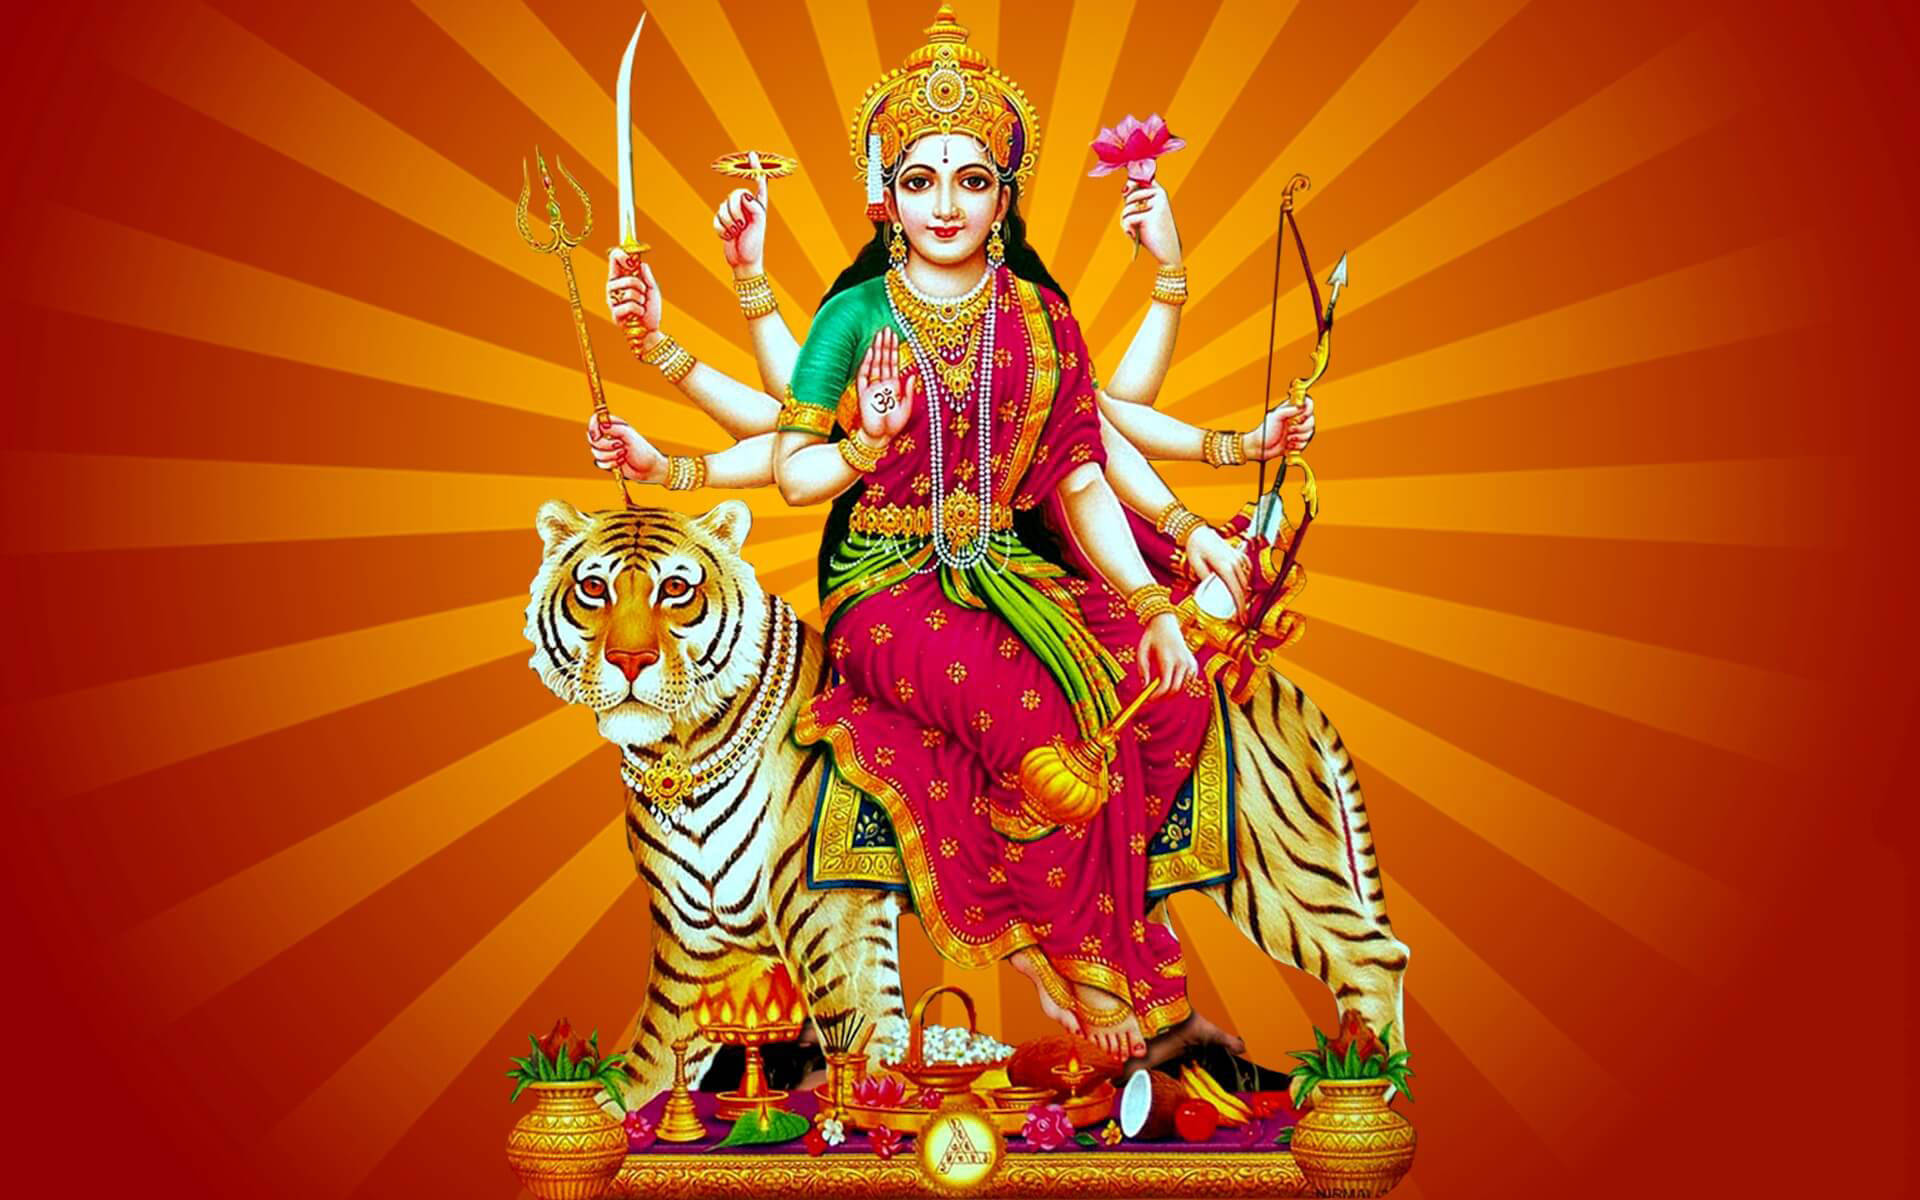 Free Durga Mata Hd Wallpaper Downloads, [100+] Durga Mata Hd Wallpapers for  FREE 